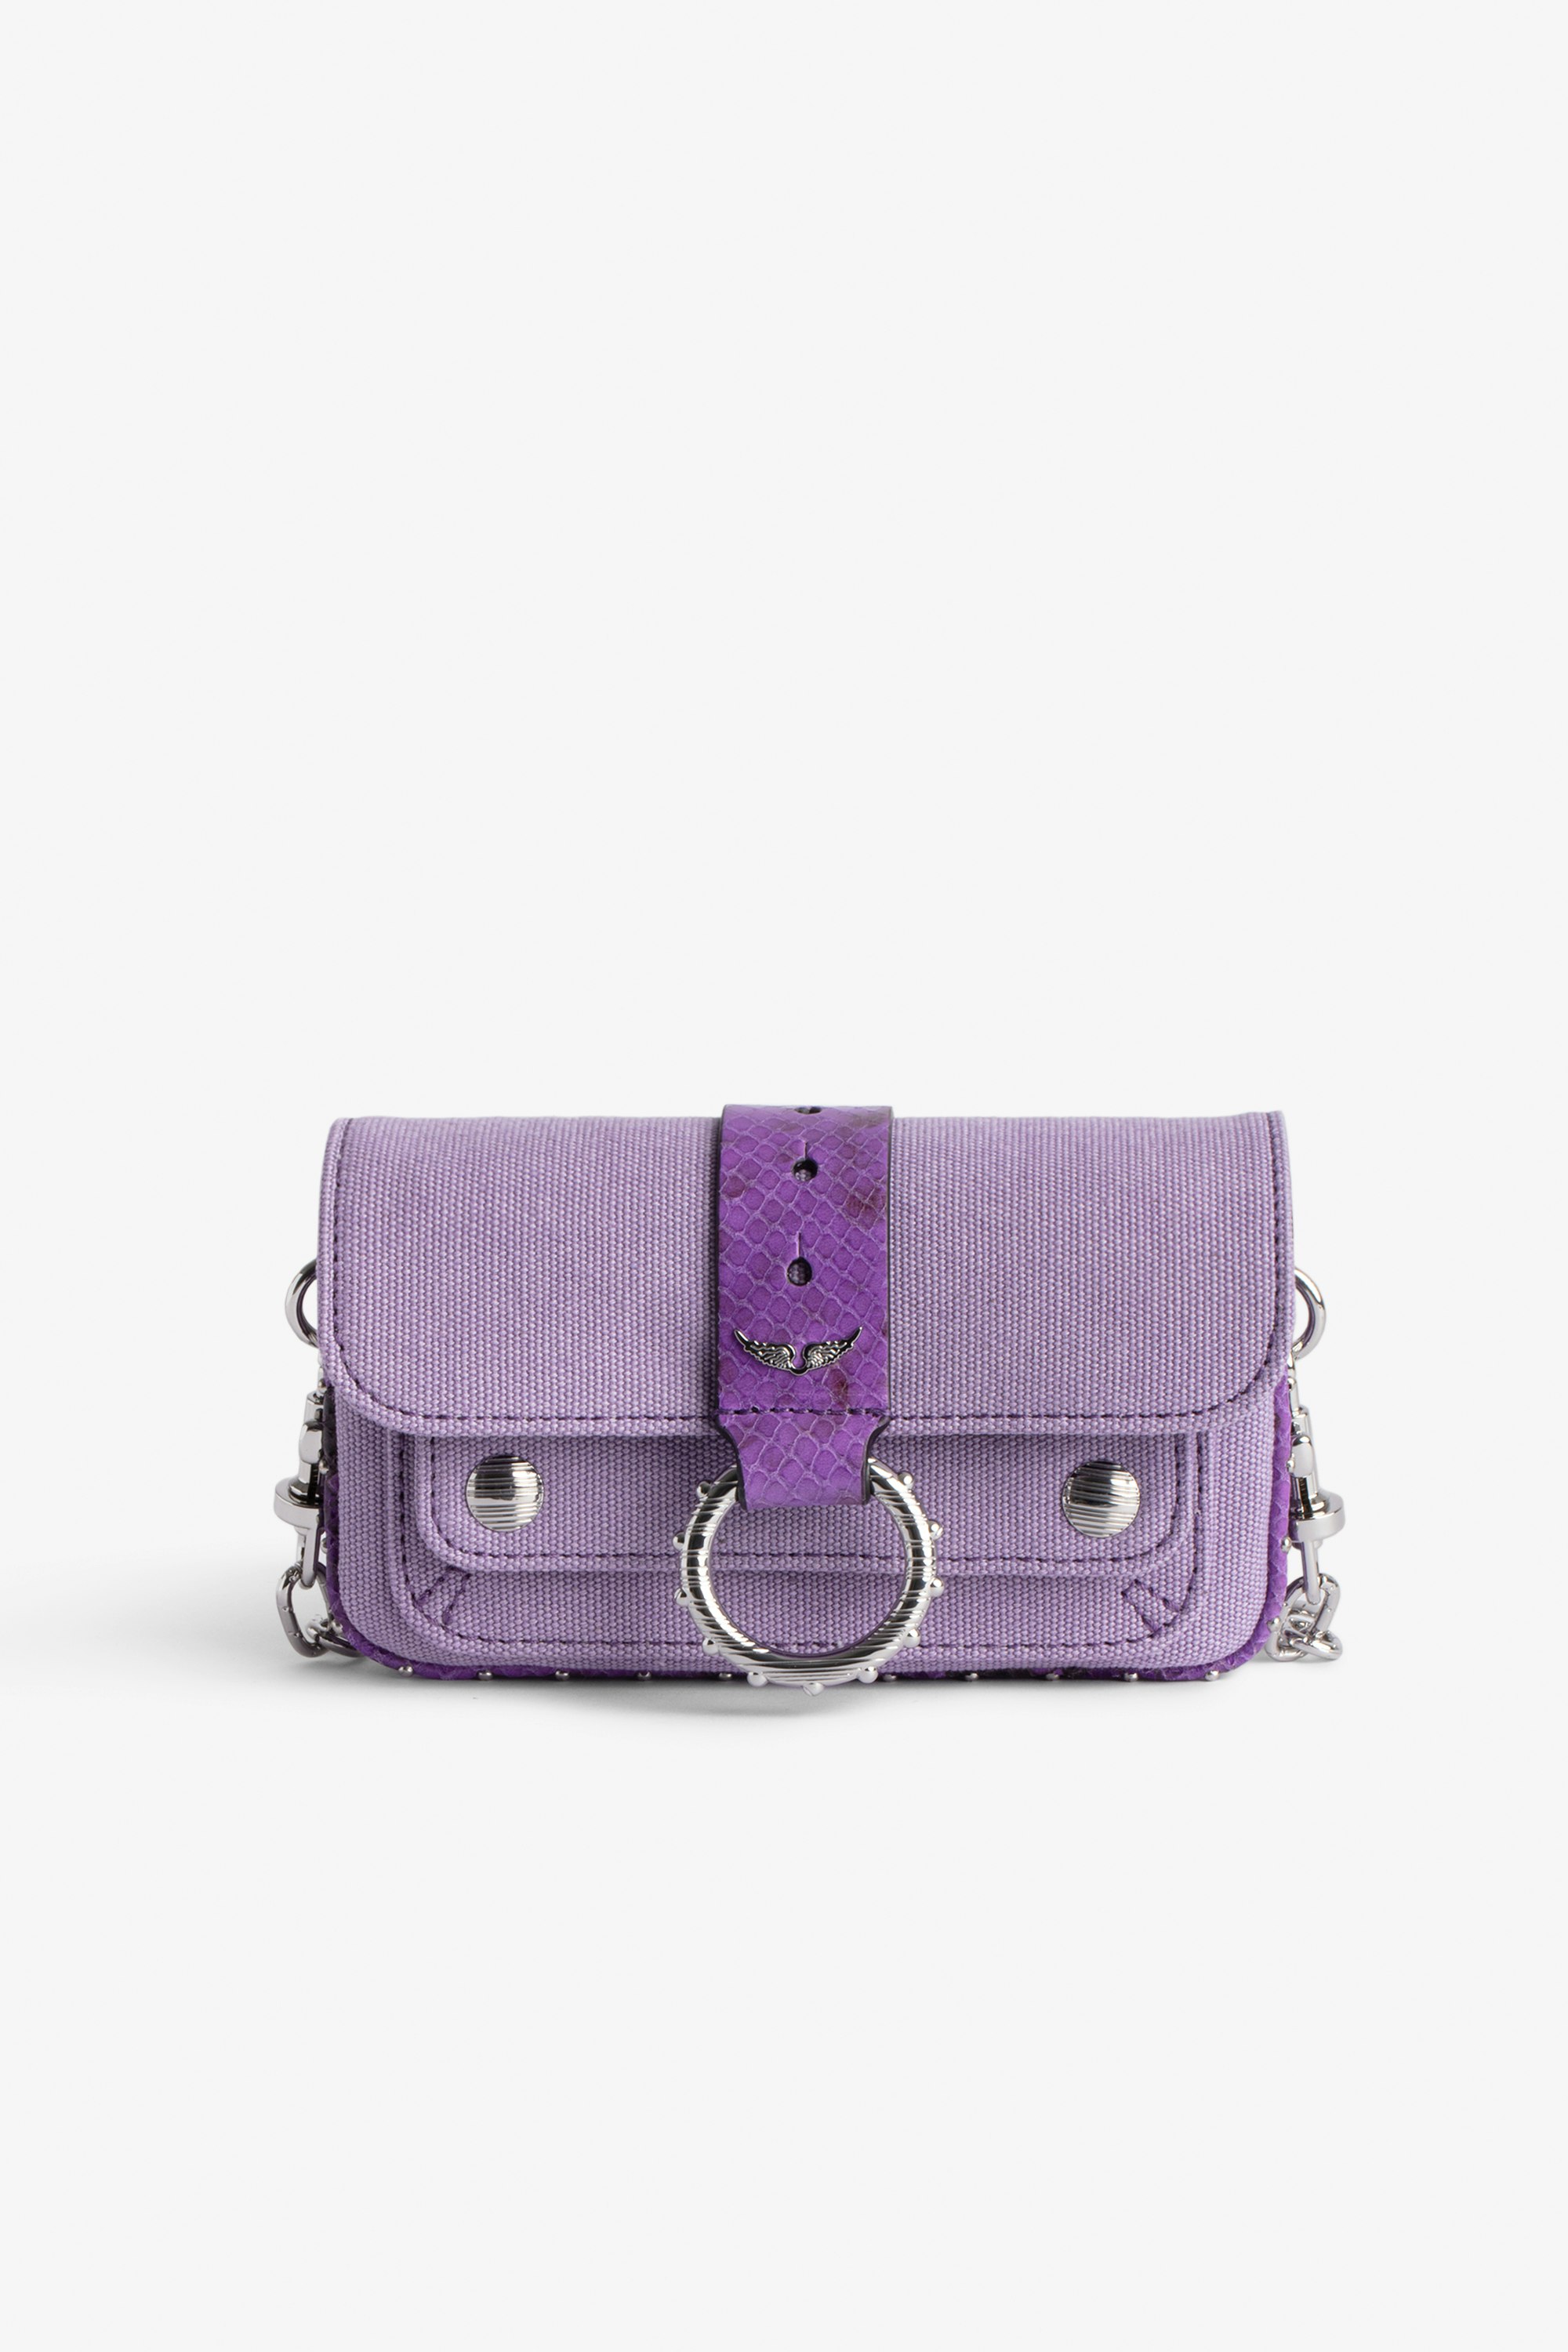 Bolso Kate Wallet Bolso pequeño violeta de lona de algodón para mujer con detalles de pitón